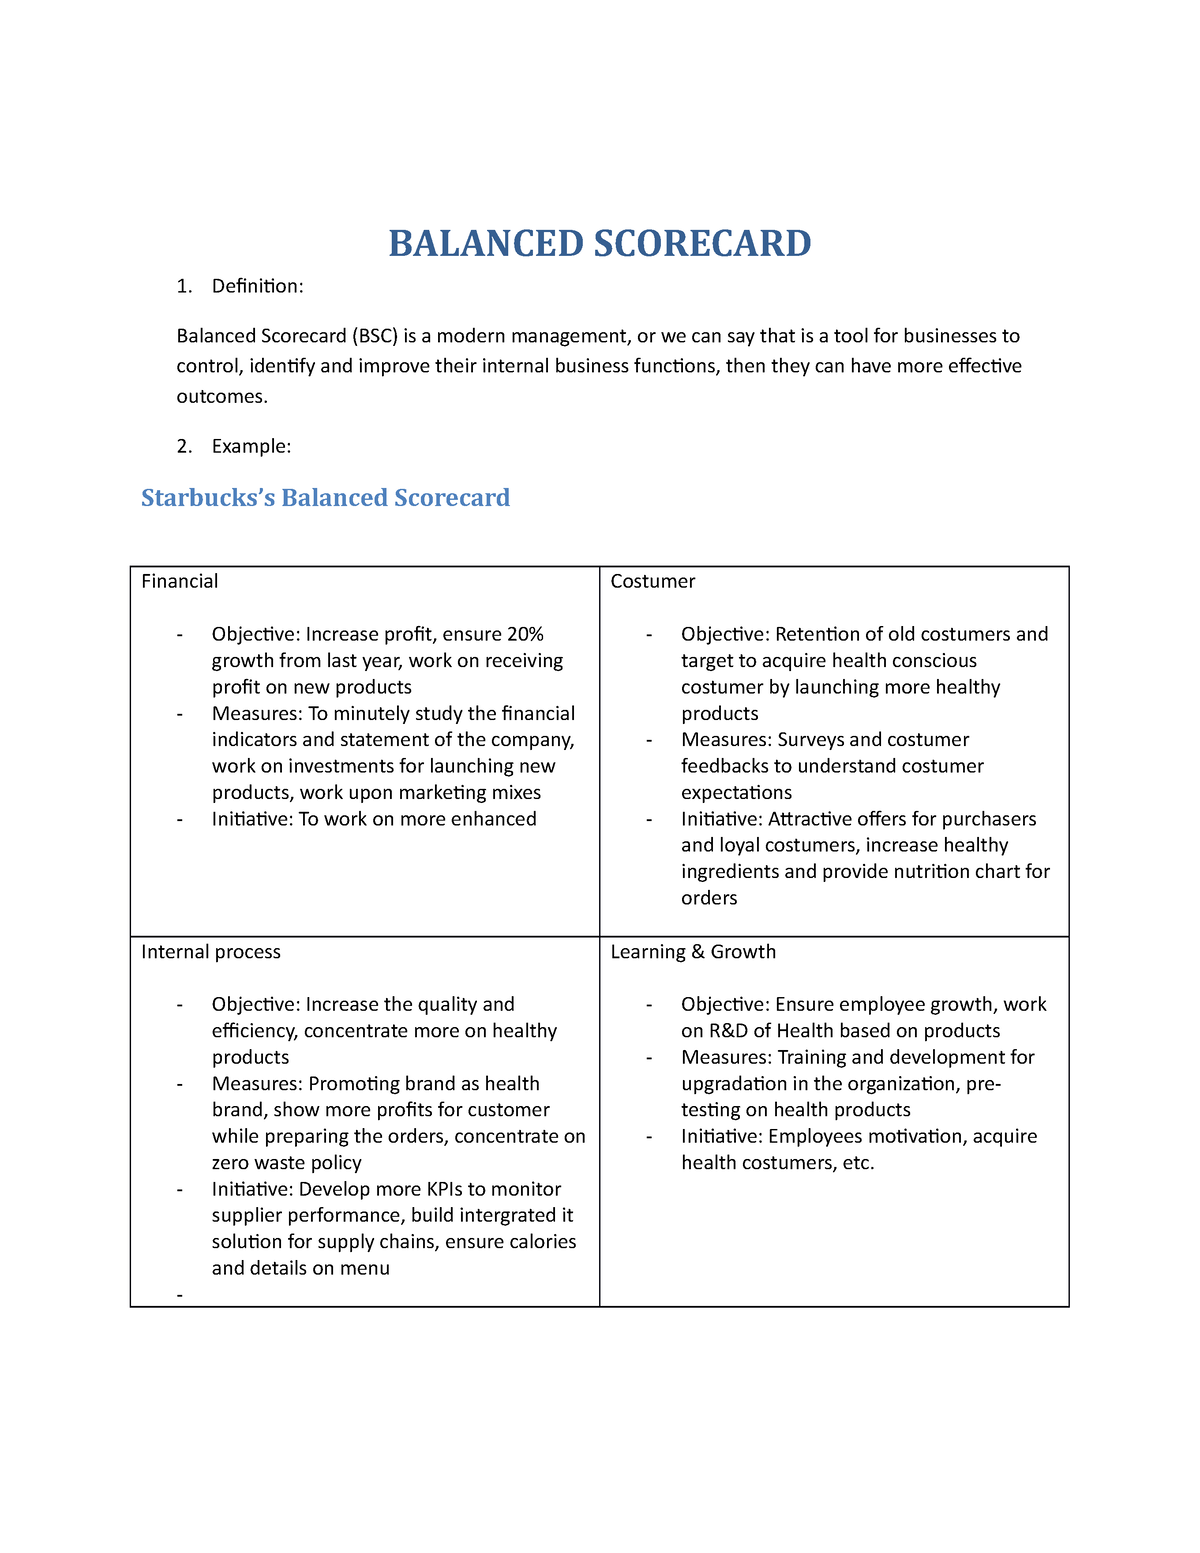 starbucks balanced scorecard